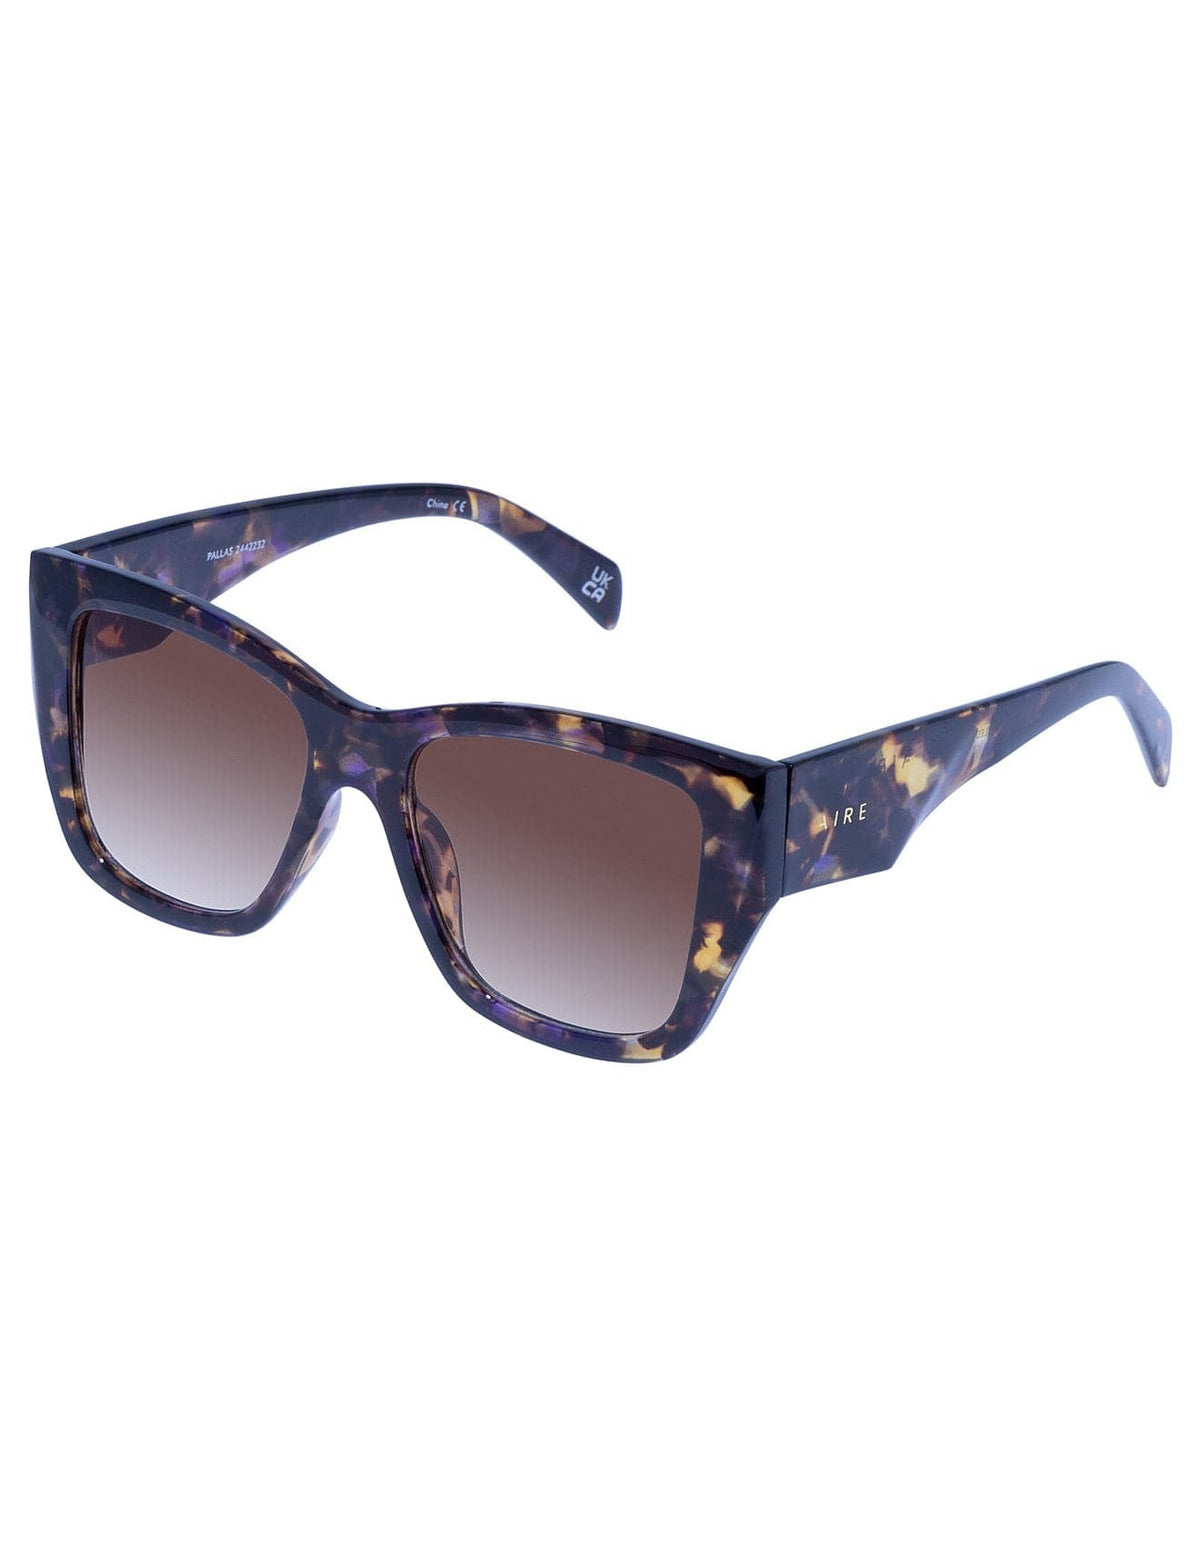 Pallas Sunglasses - Navy Galaxy Tort - Aire - Splash Swimwear  - accessories, aire, Apr24, new accessories, new arrivals, sunglasses, Sunnies - Splash Swimwear 